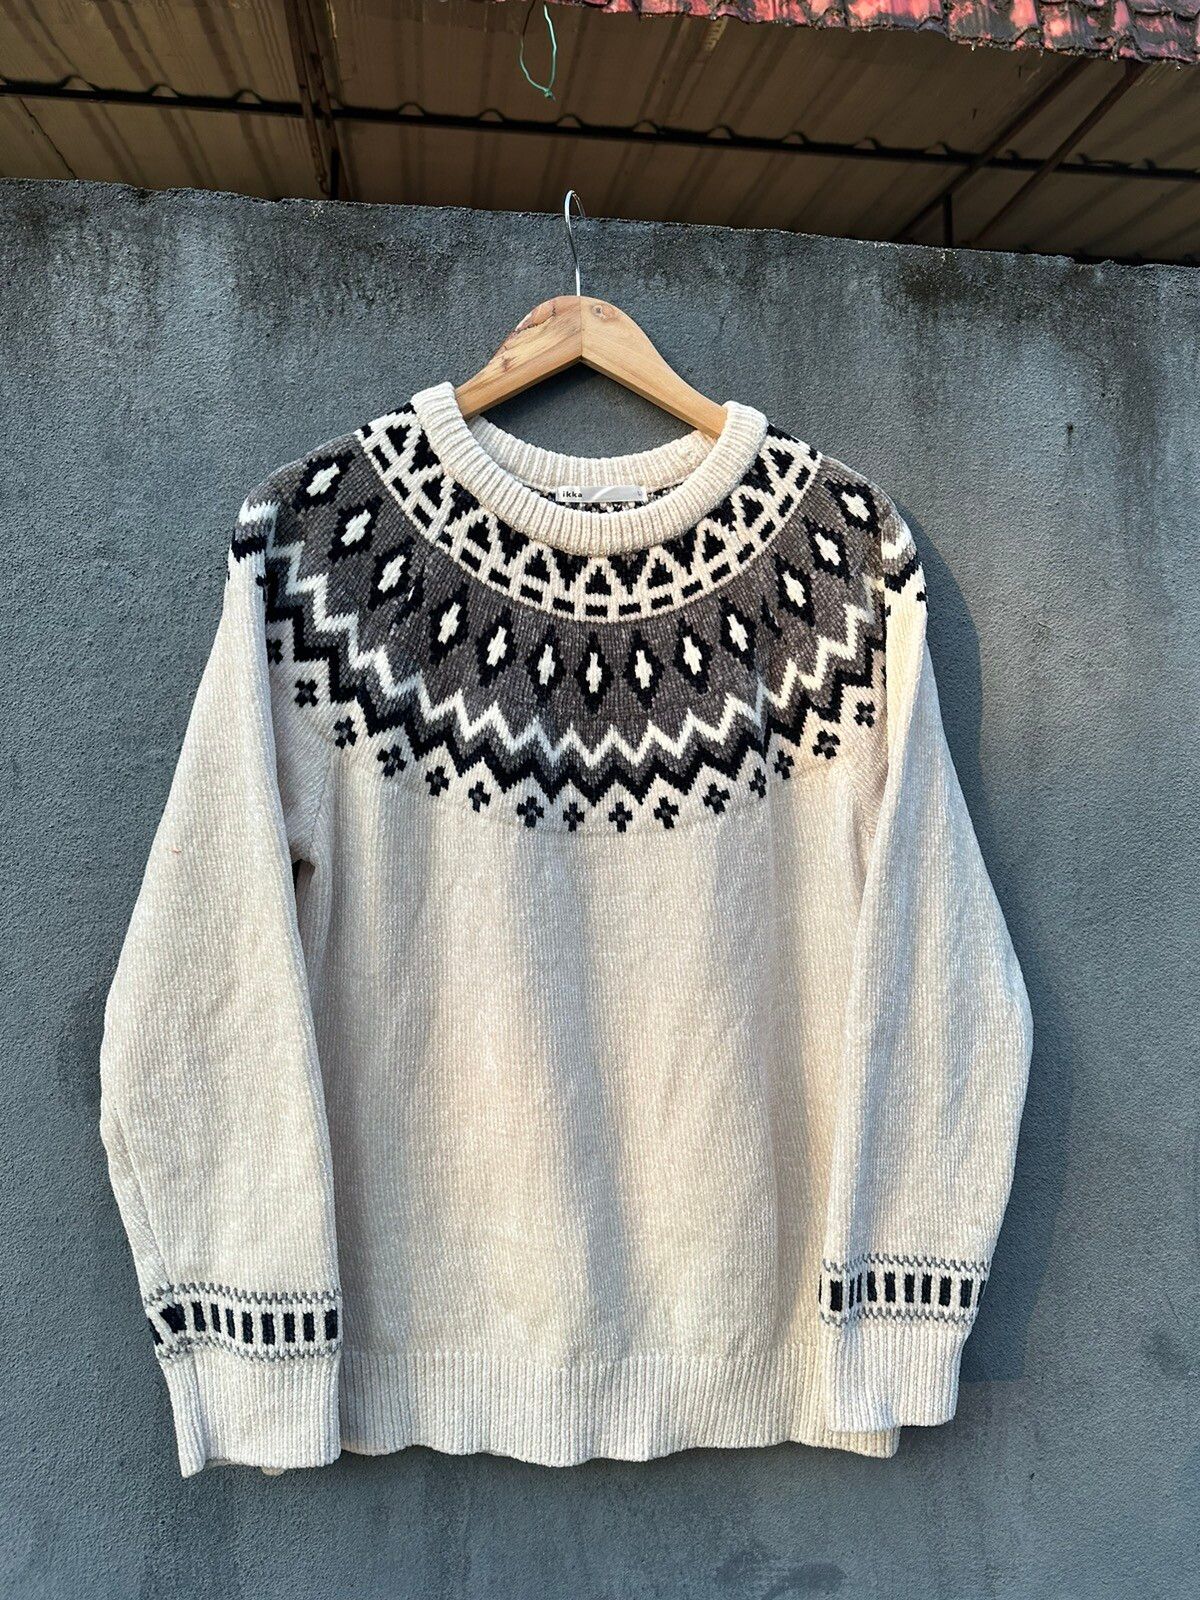 Japanese Brand Ikka Knitted Sweatshirt Size US M / EU 48-50 / 2 - 1 Preview